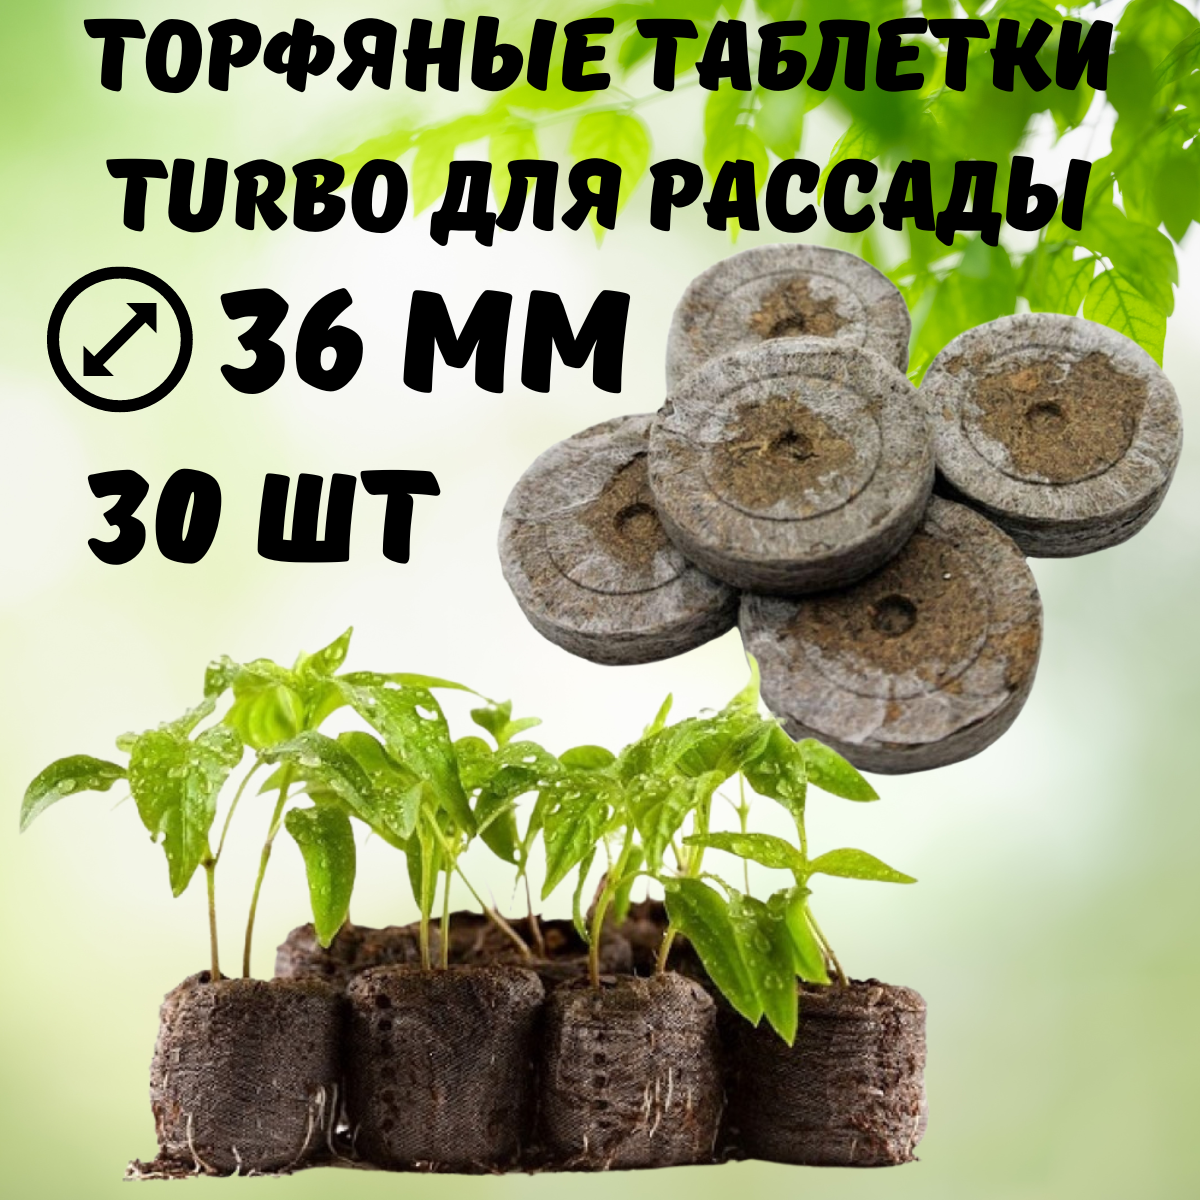 Turbo Торфяные таблетки для рассады Turbo 36 мм 30 шт